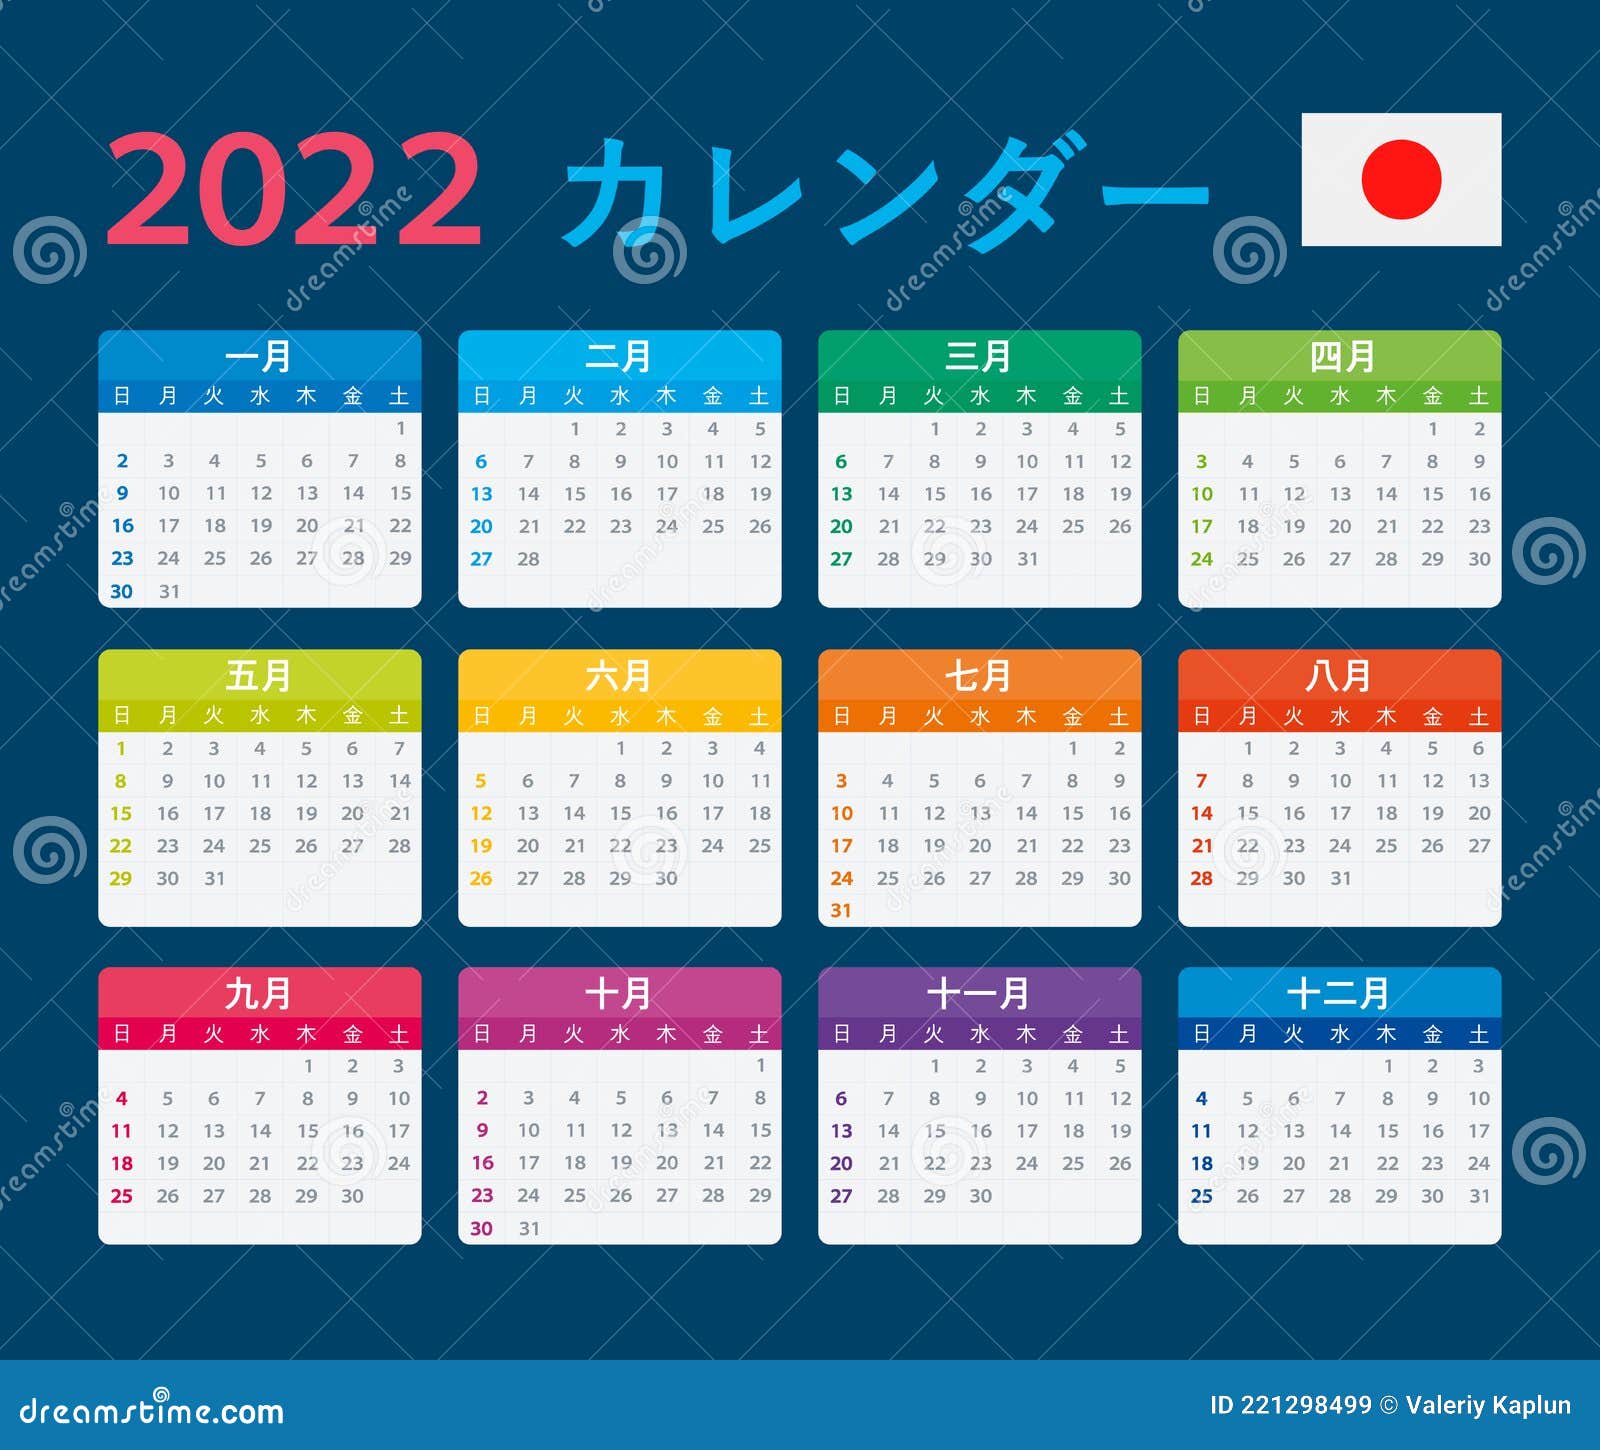 2022 Calendar Vector Template Graphic Illustration Japan Version Translation Calendar Names Of Months Names Of Days Stock Vector Illustration Of April Japanese 221298499